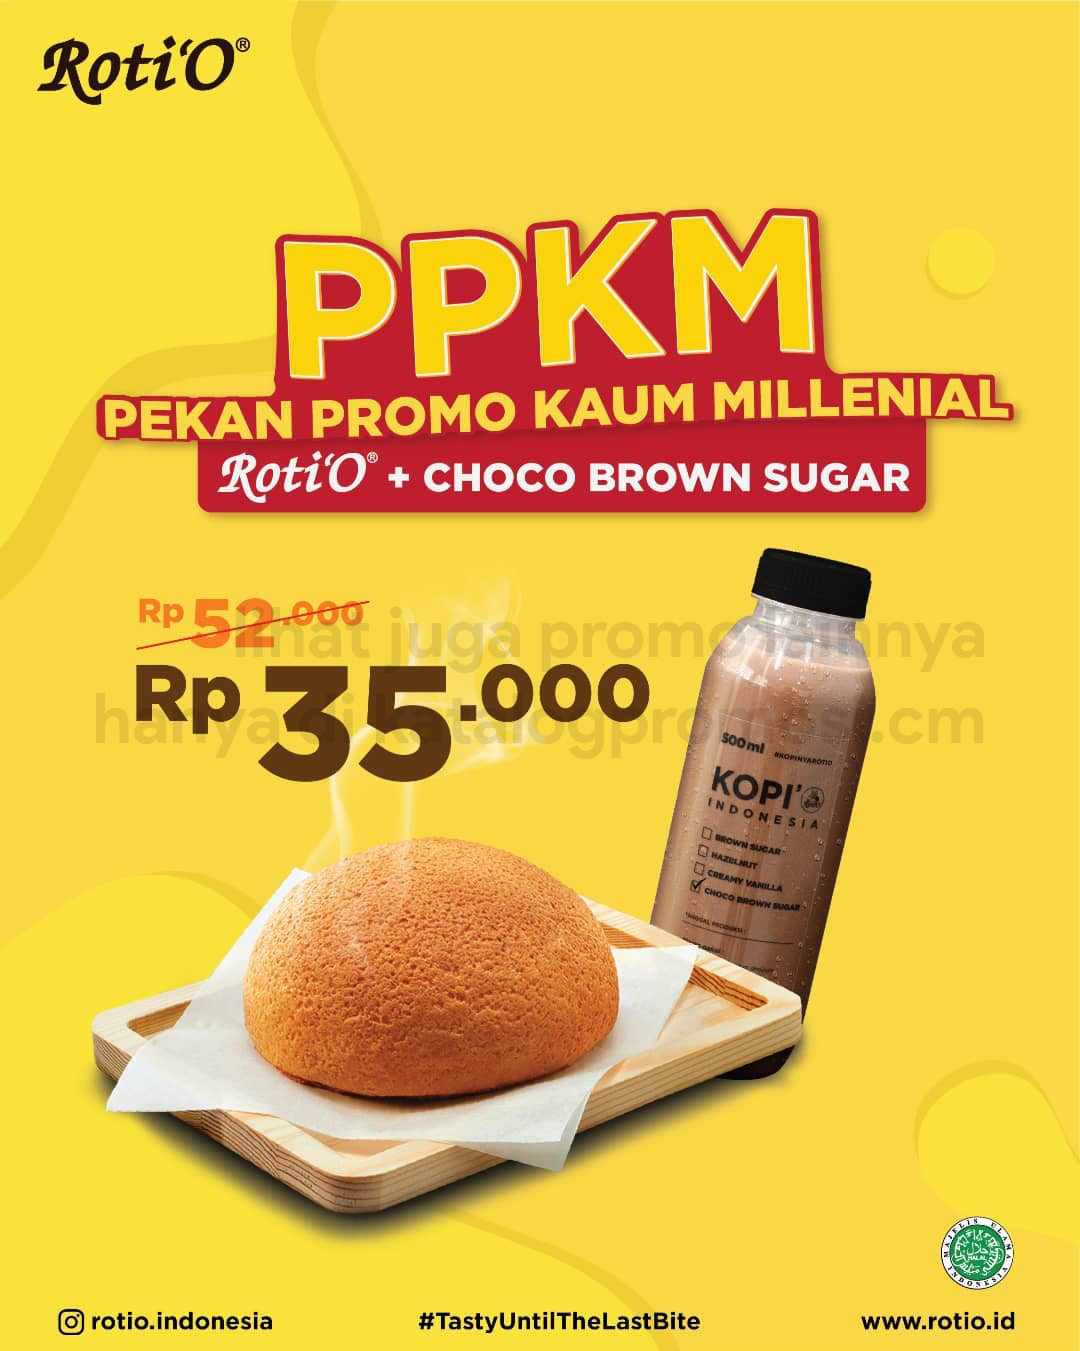 Promo ROTI'O PPKM/Pekan Promo Kaum Millenial  - Paket 1 Roti'O & 1 Kopi'O cuma Rp. 35.000